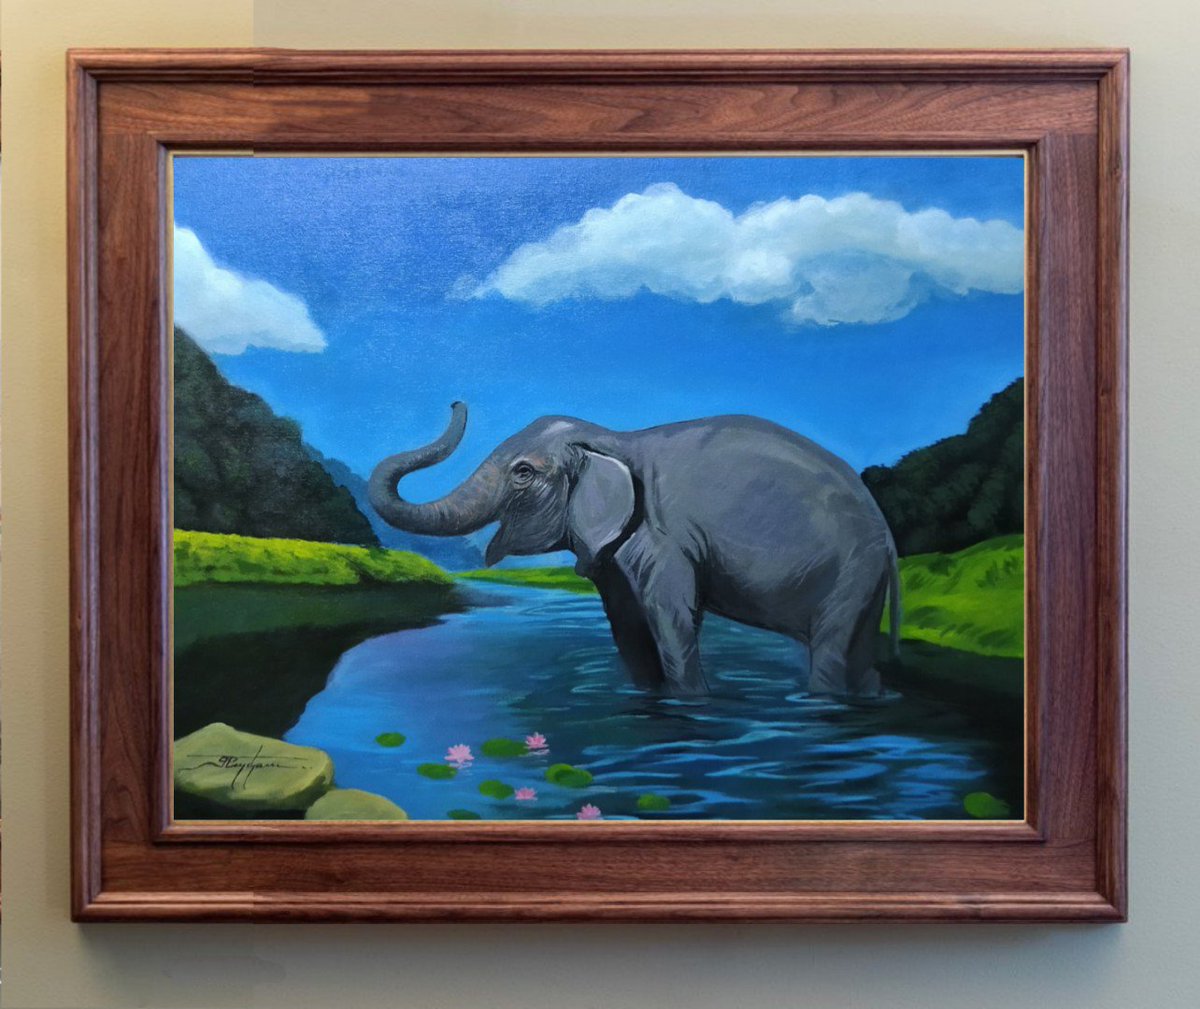 #acrylicpainting ( 3feet * 2feet )
#canvas
 #elephant #framed #art #gift #portraitarts #landscape